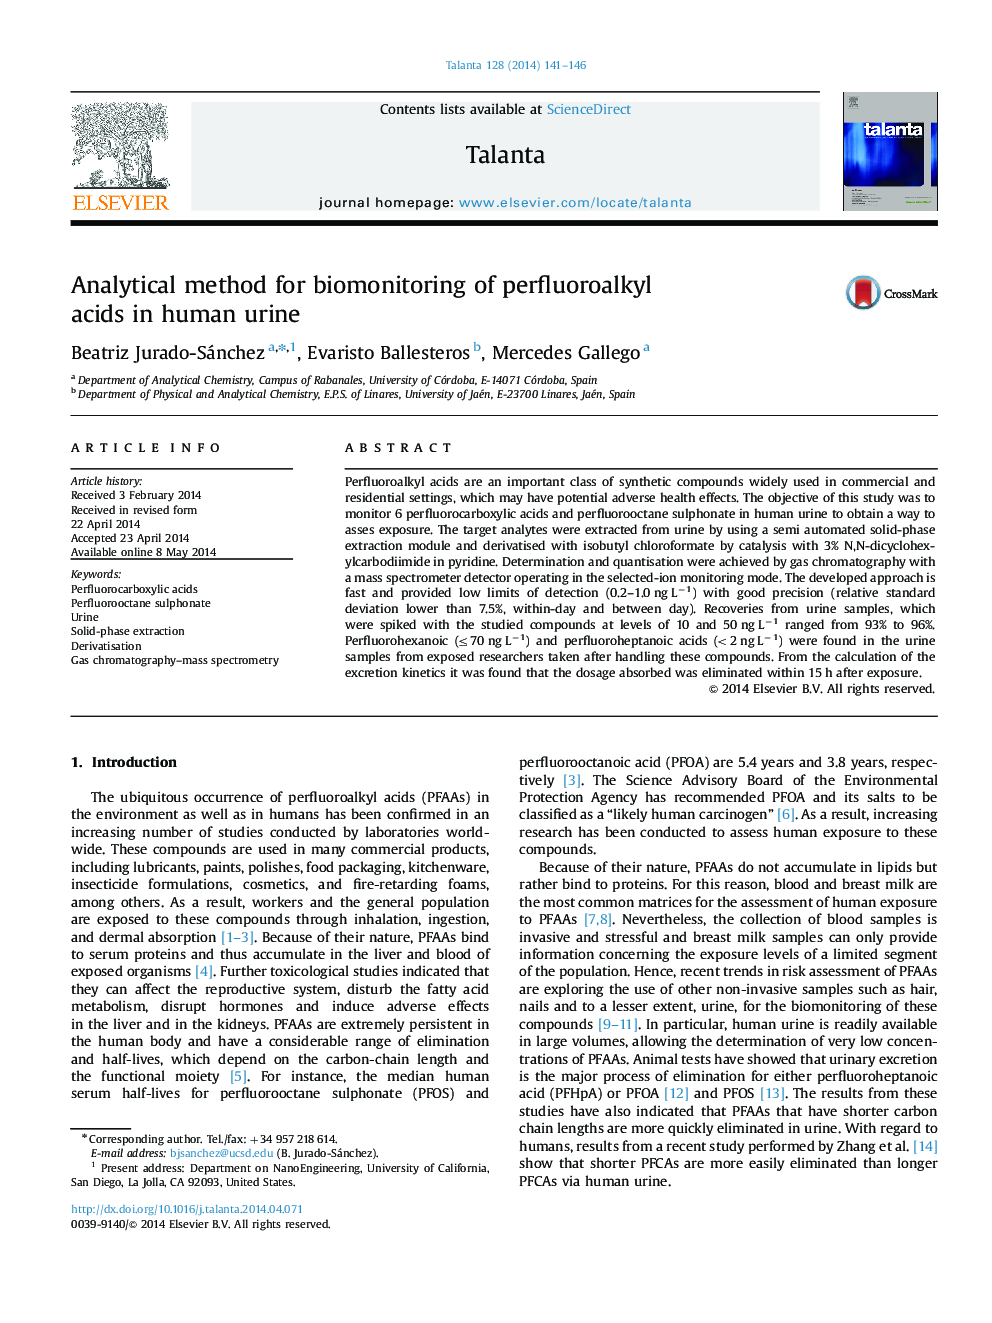 Analytical method for biomonitoring of perfluoroalkyl acids in human urine